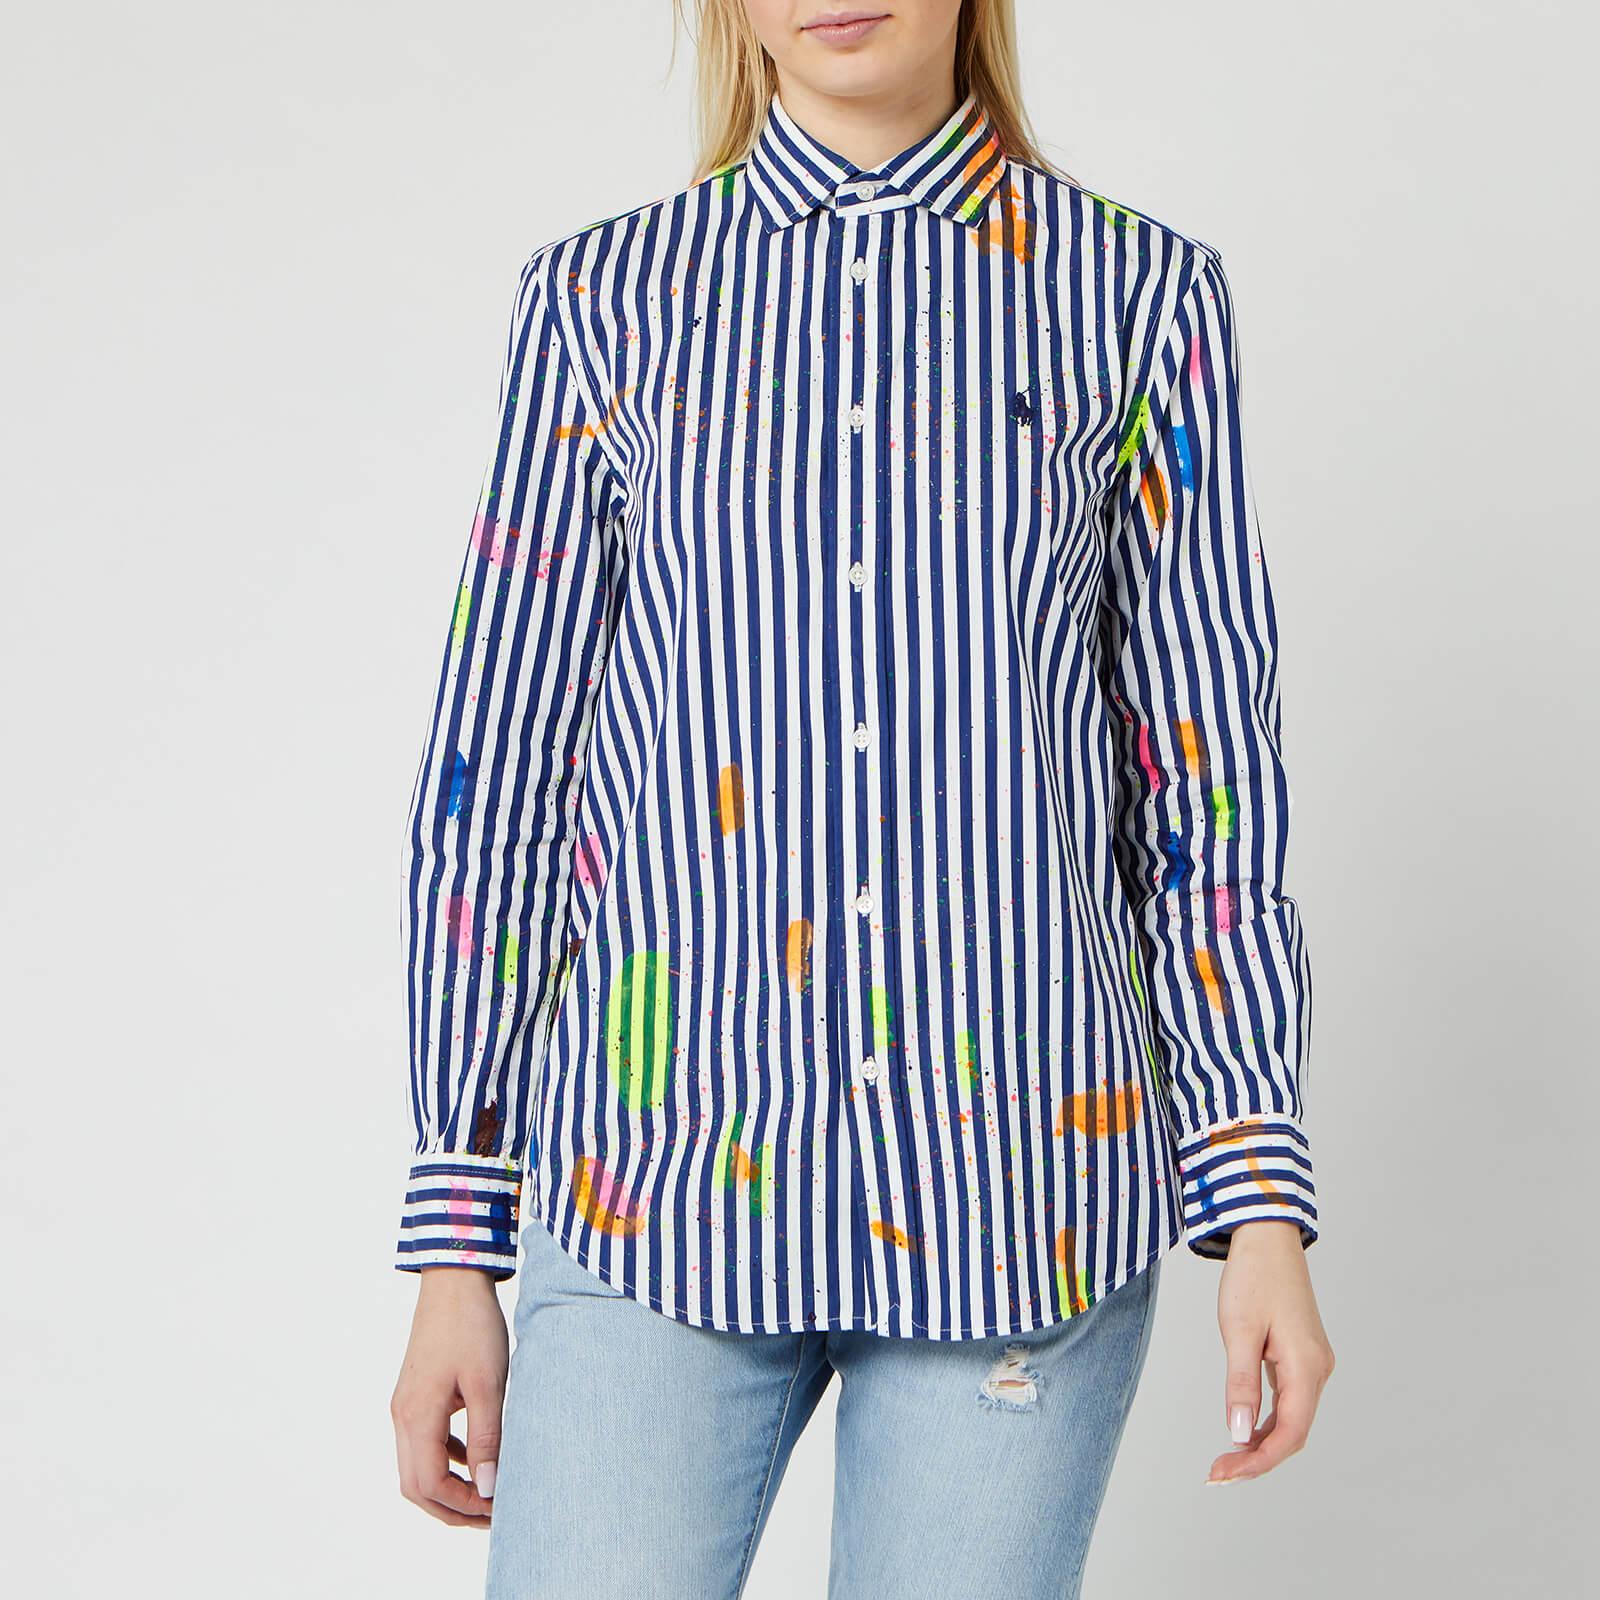 Polo Ralph Lauren Cotton 120's Stripe Paint Splatter Shirt in Blue - Lyst